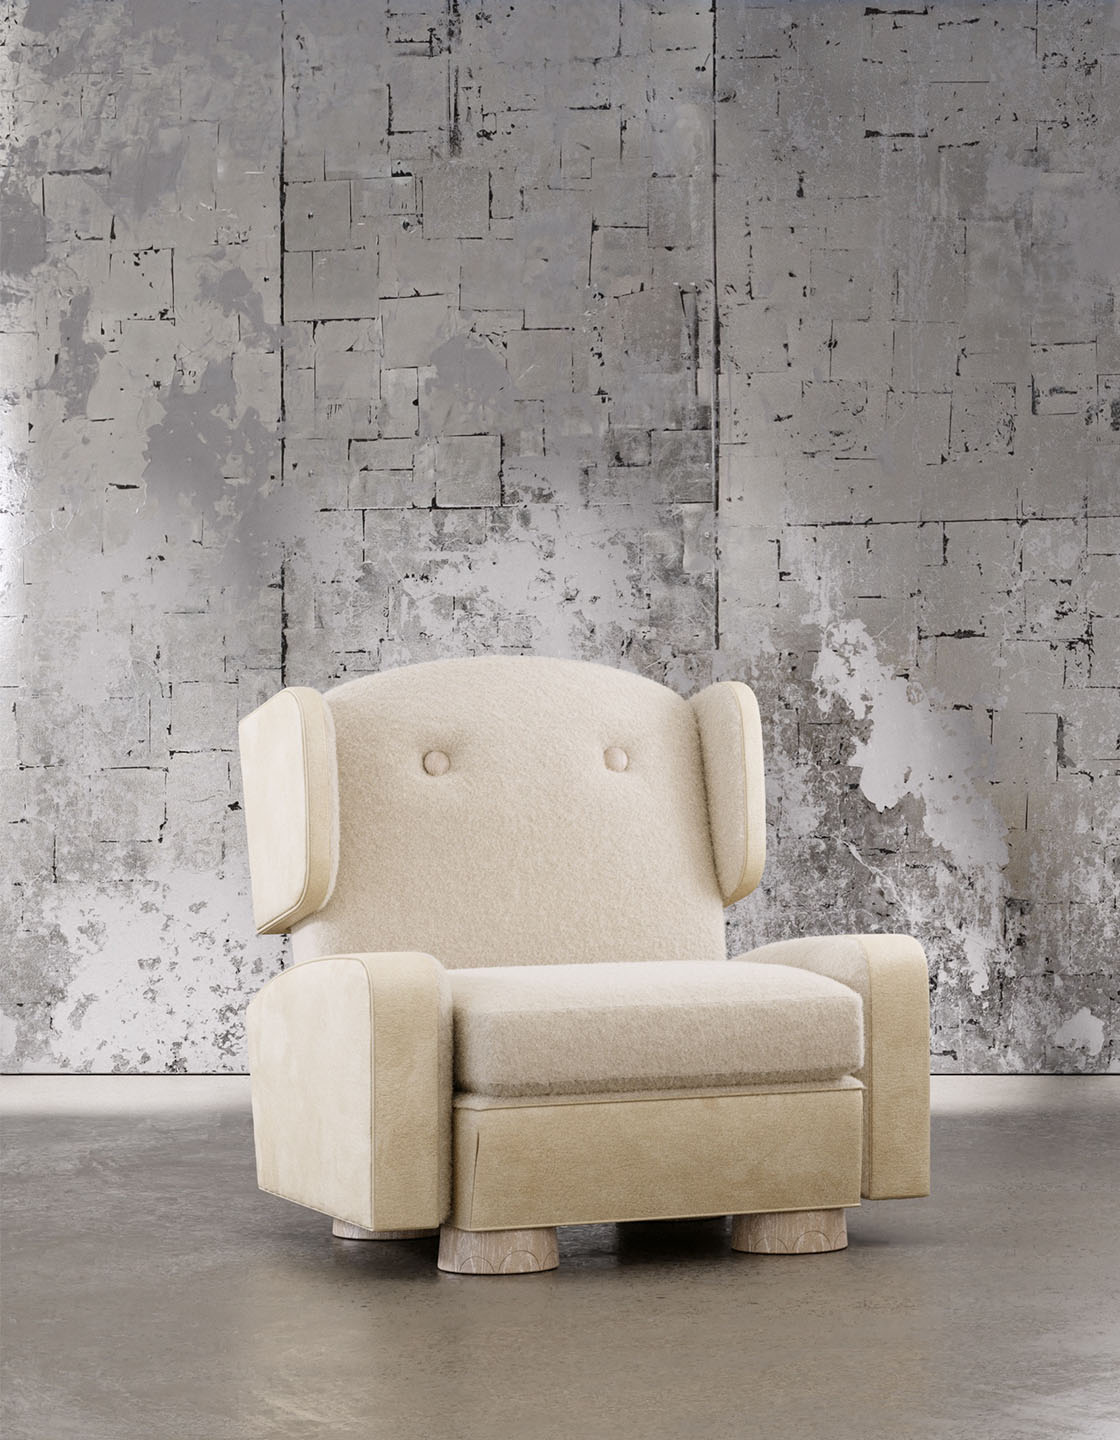 New-York-Design-Center-WNWN-De-La-Vega-L'Elephante-Chair-Gallery